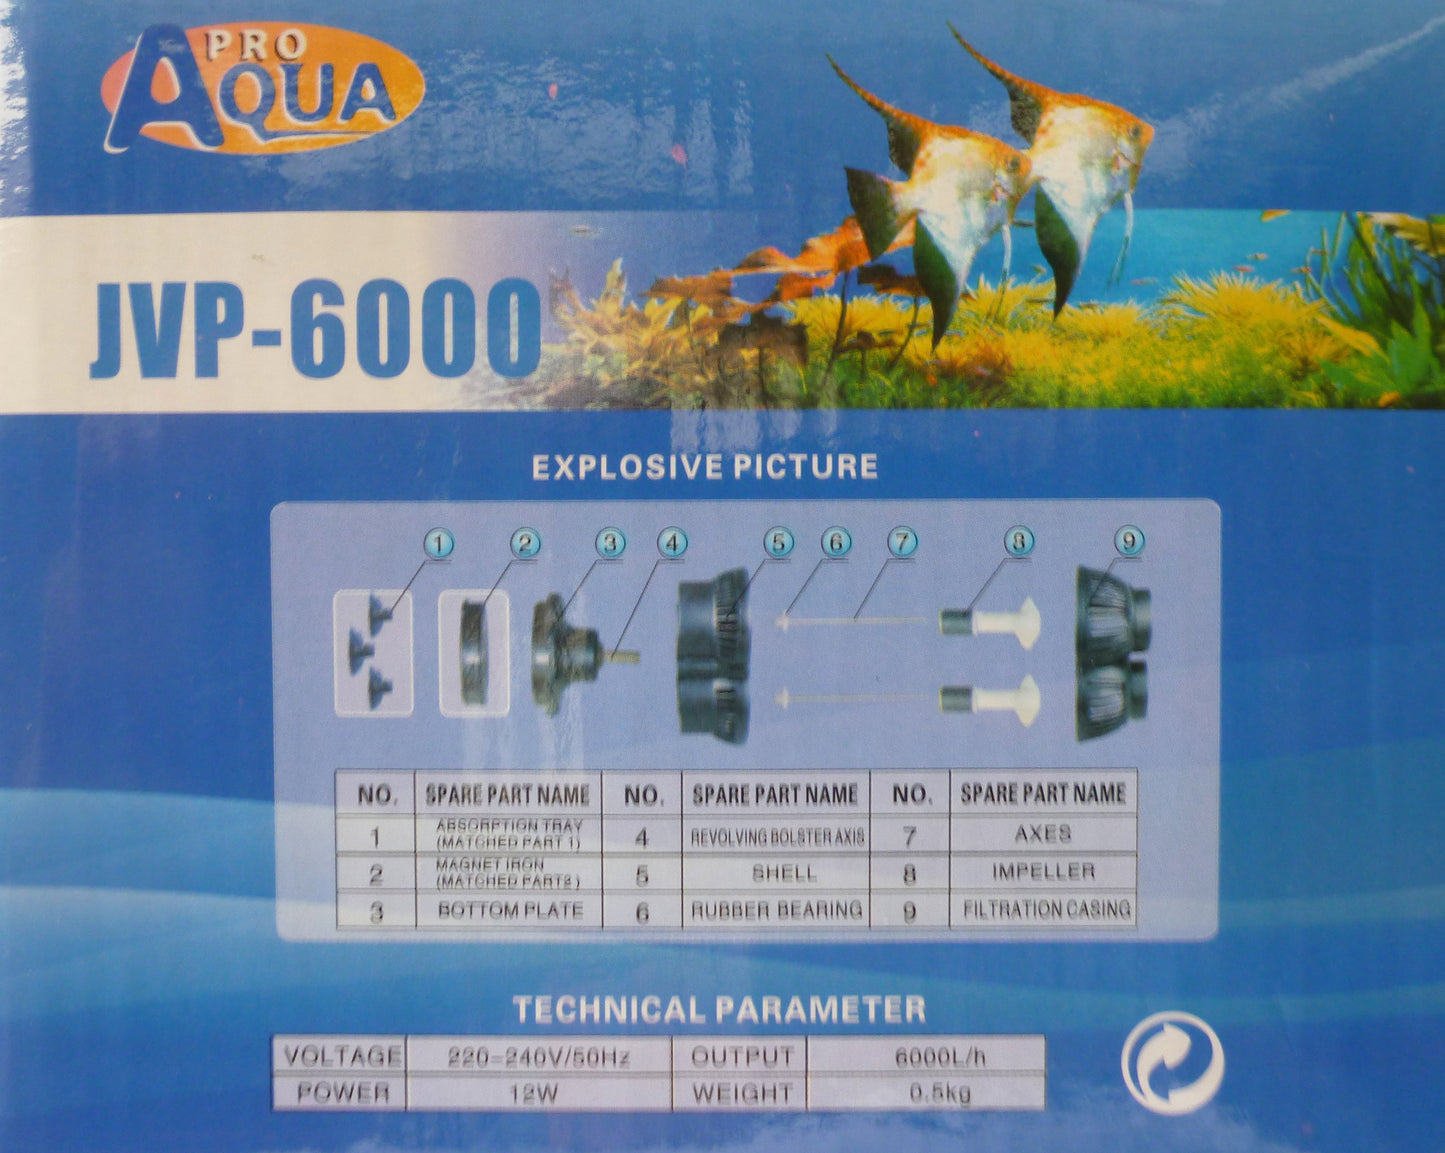 6000L/H Power head 12 Watt Marine JVP-6000